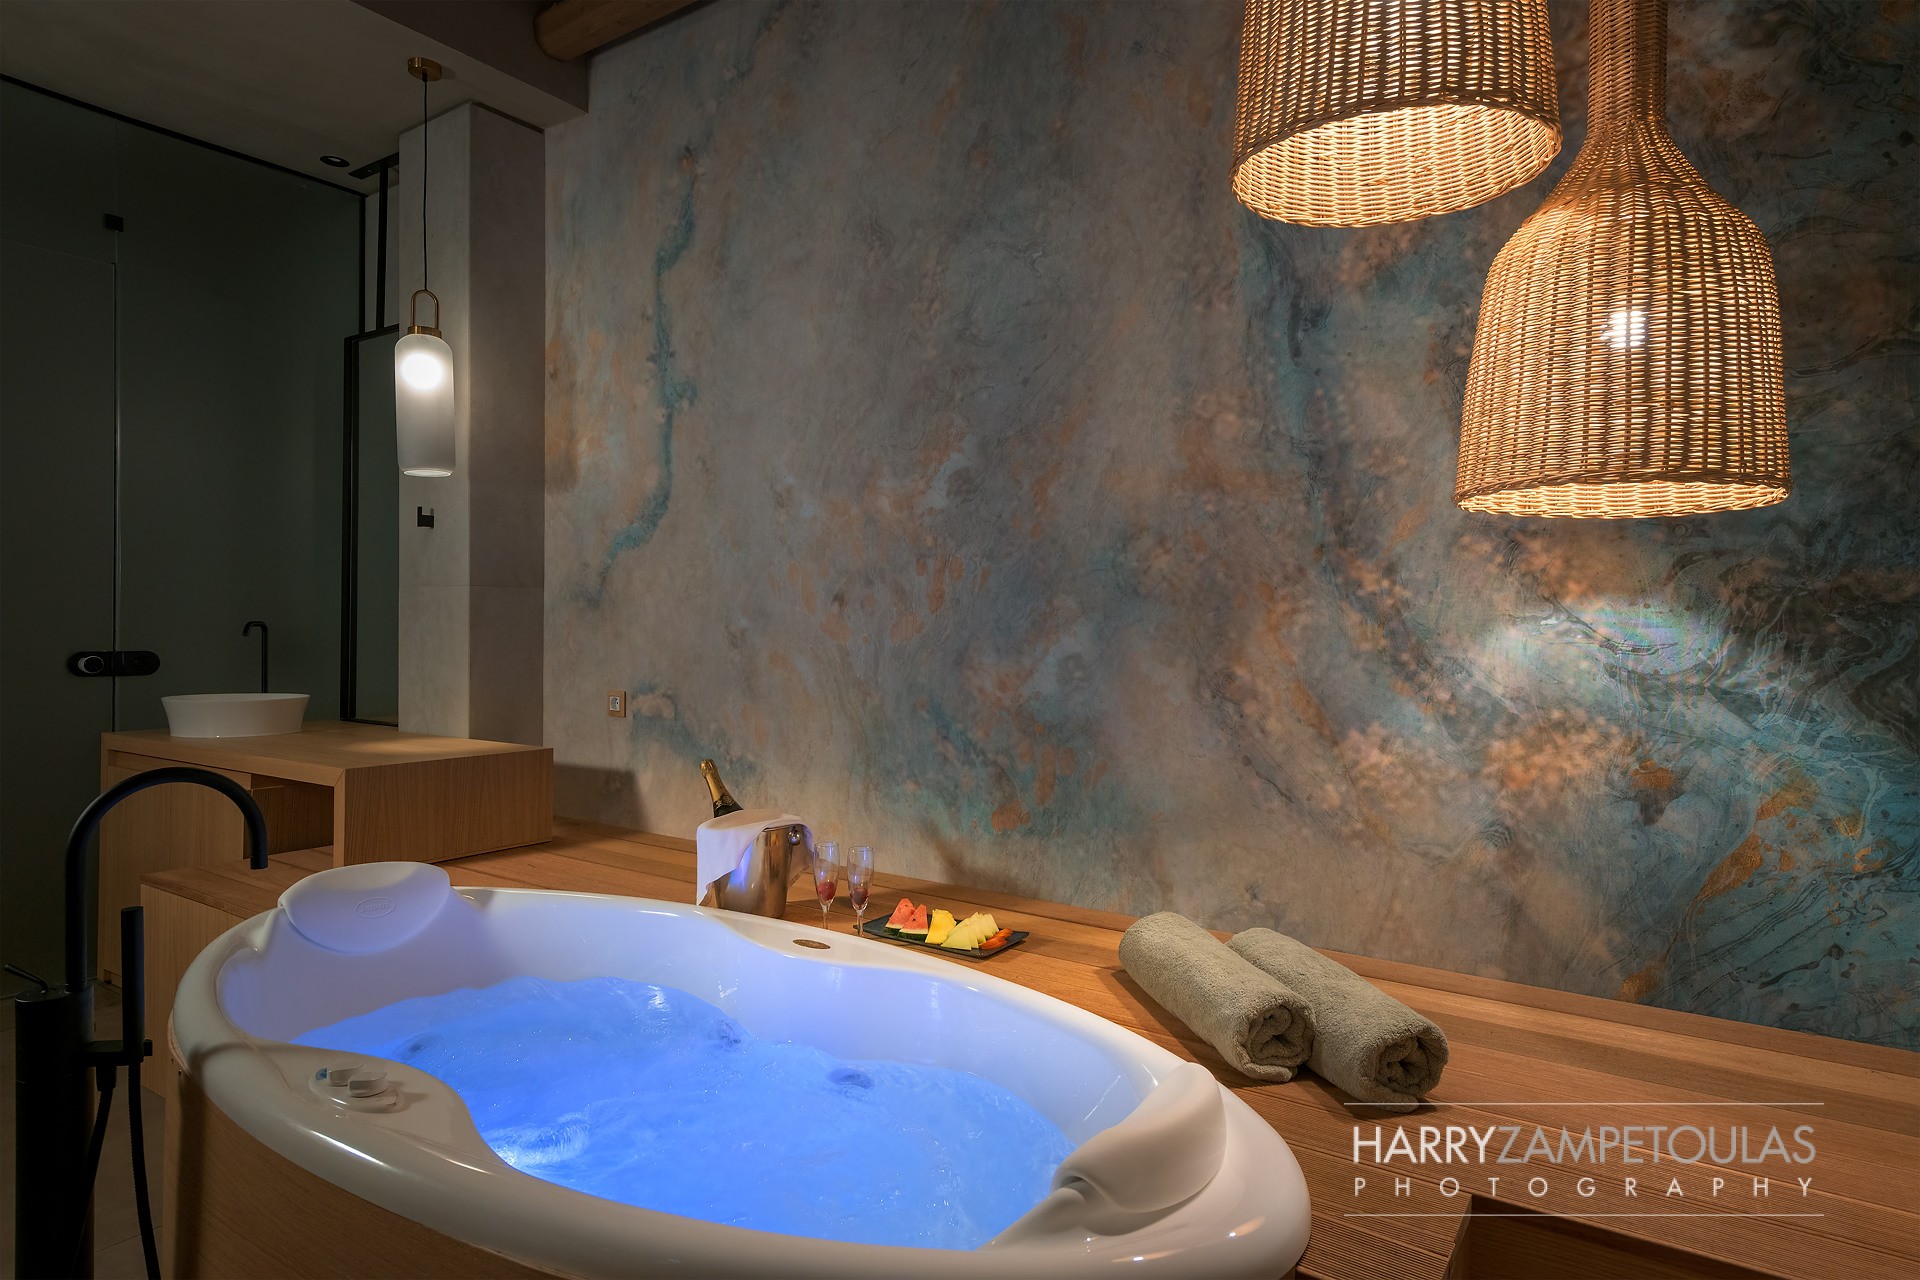 SPA-CoupleSuite-3 Porto Angeli Resort Hotel - Hotel Photography Harry Zampetoulas 